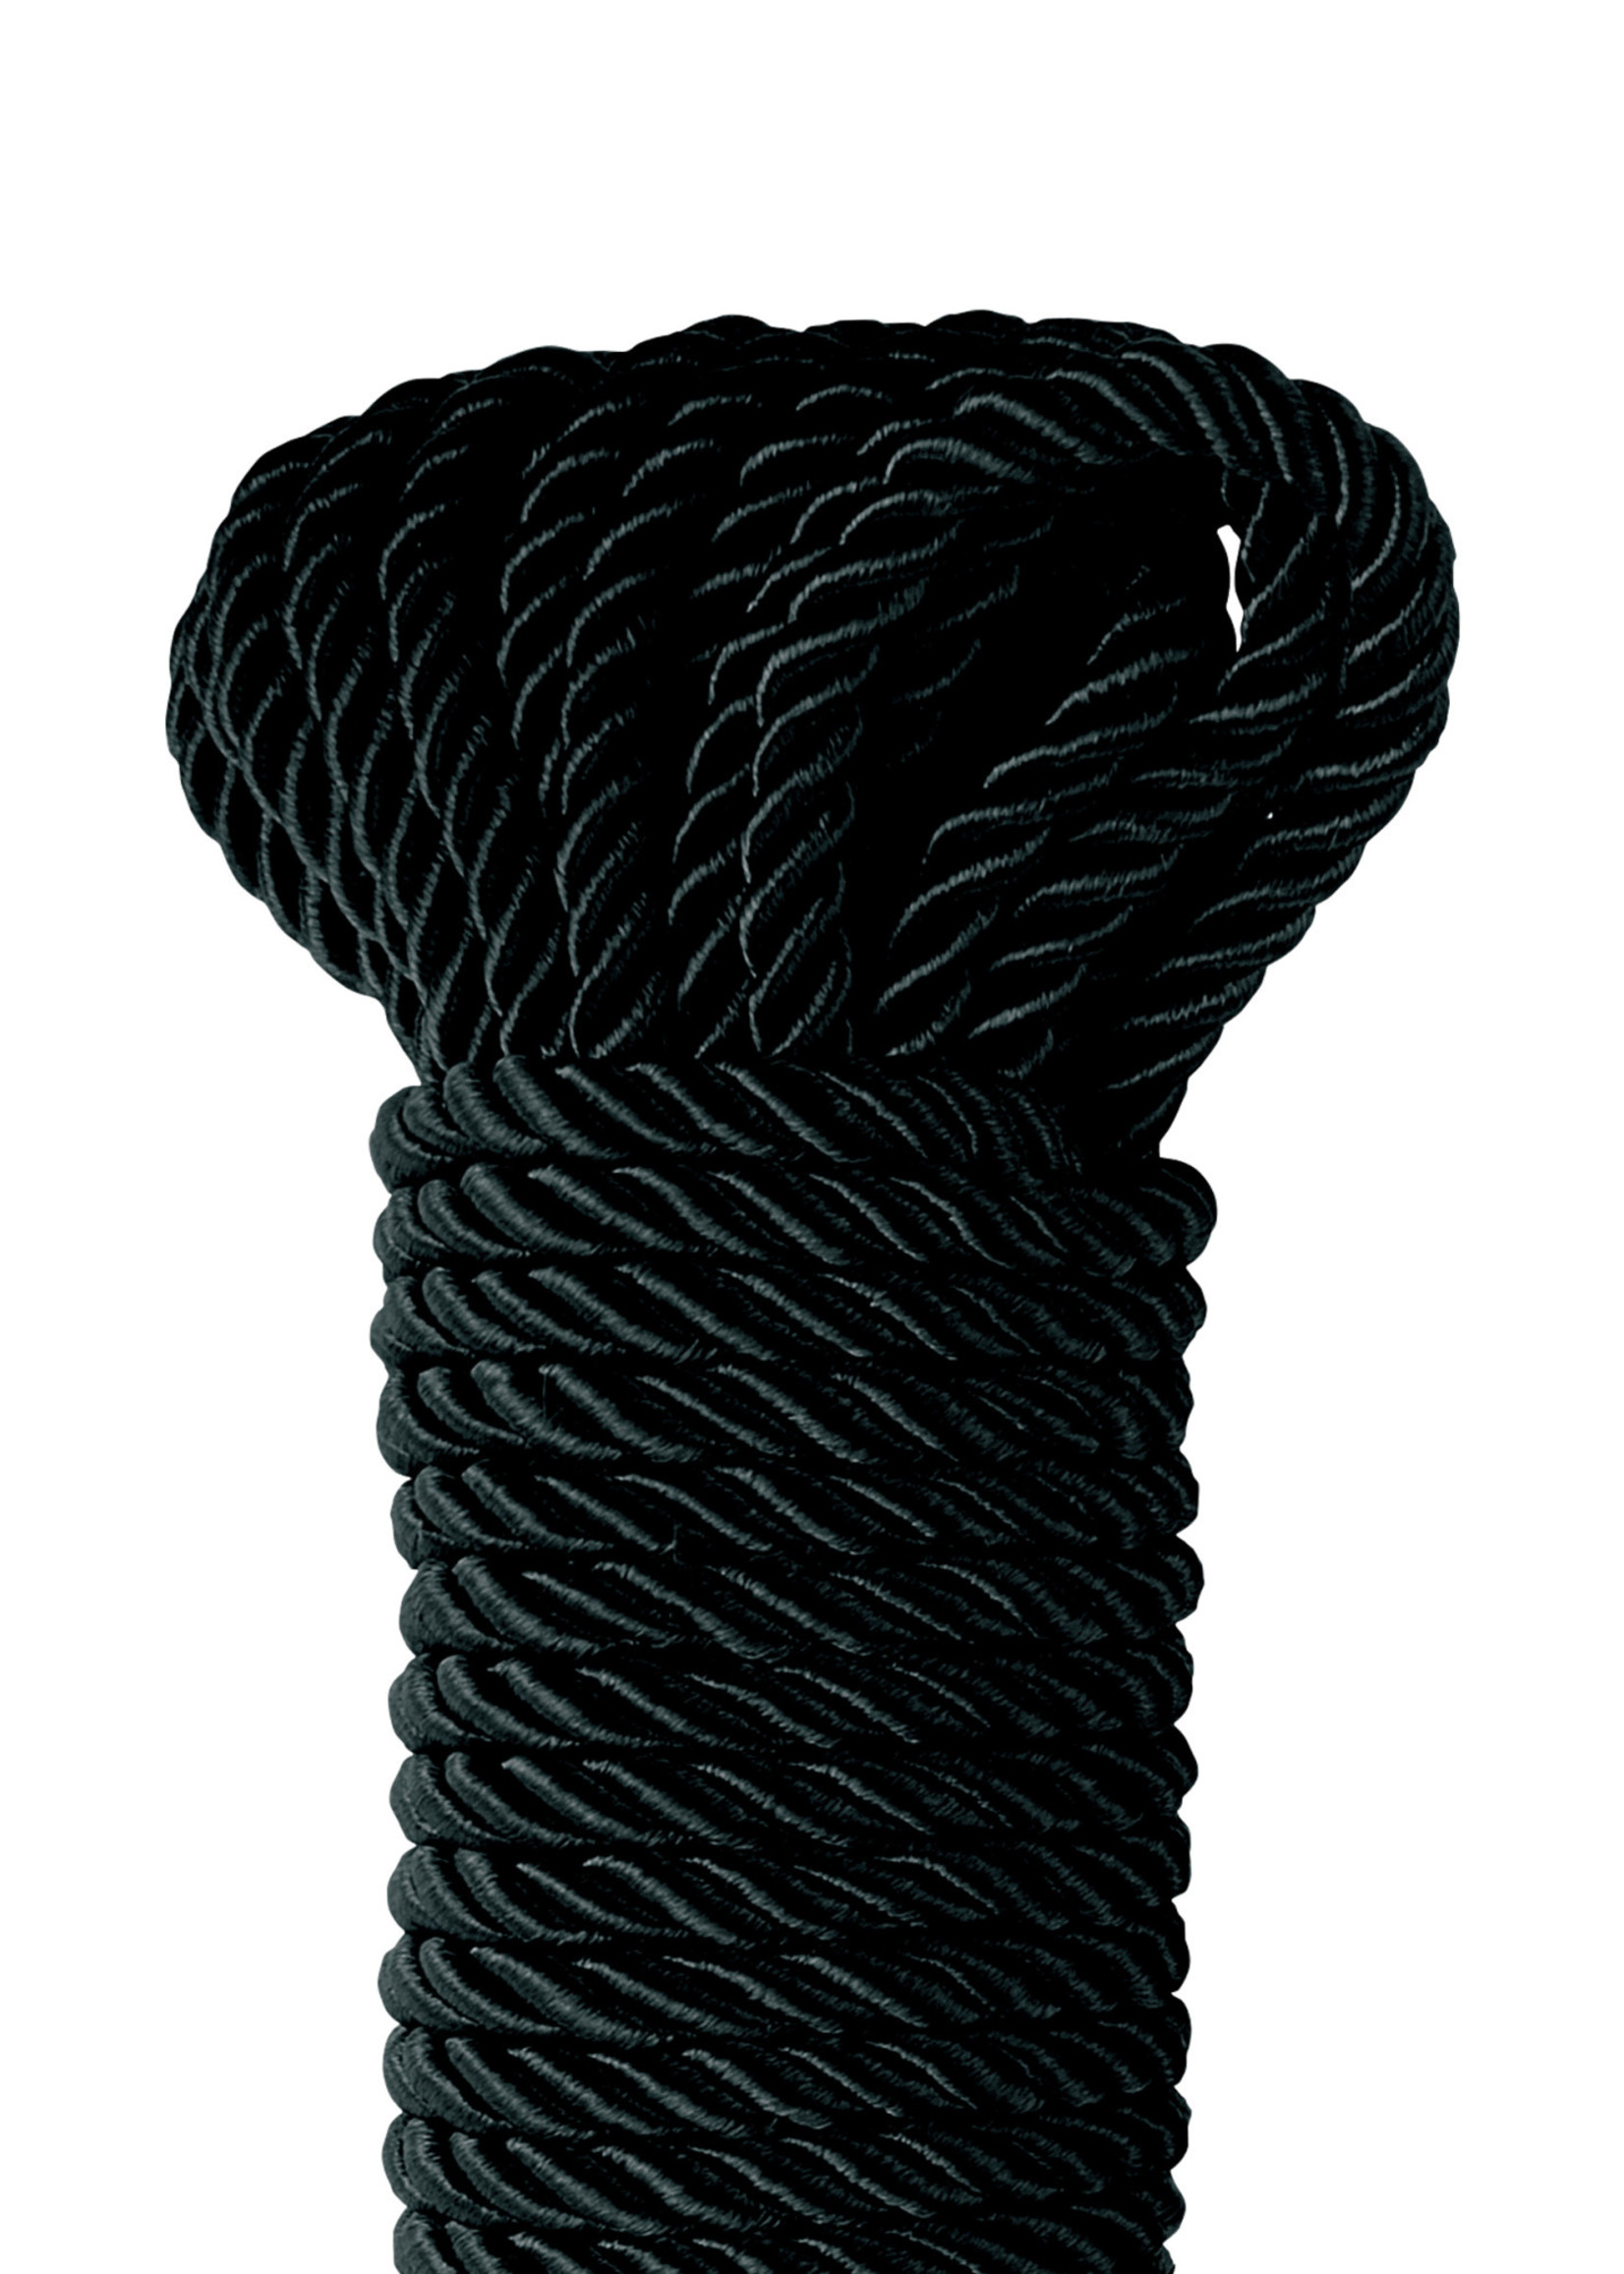 Pipedream Fetish Fantasy Series Deluxe Silk Rope - Black